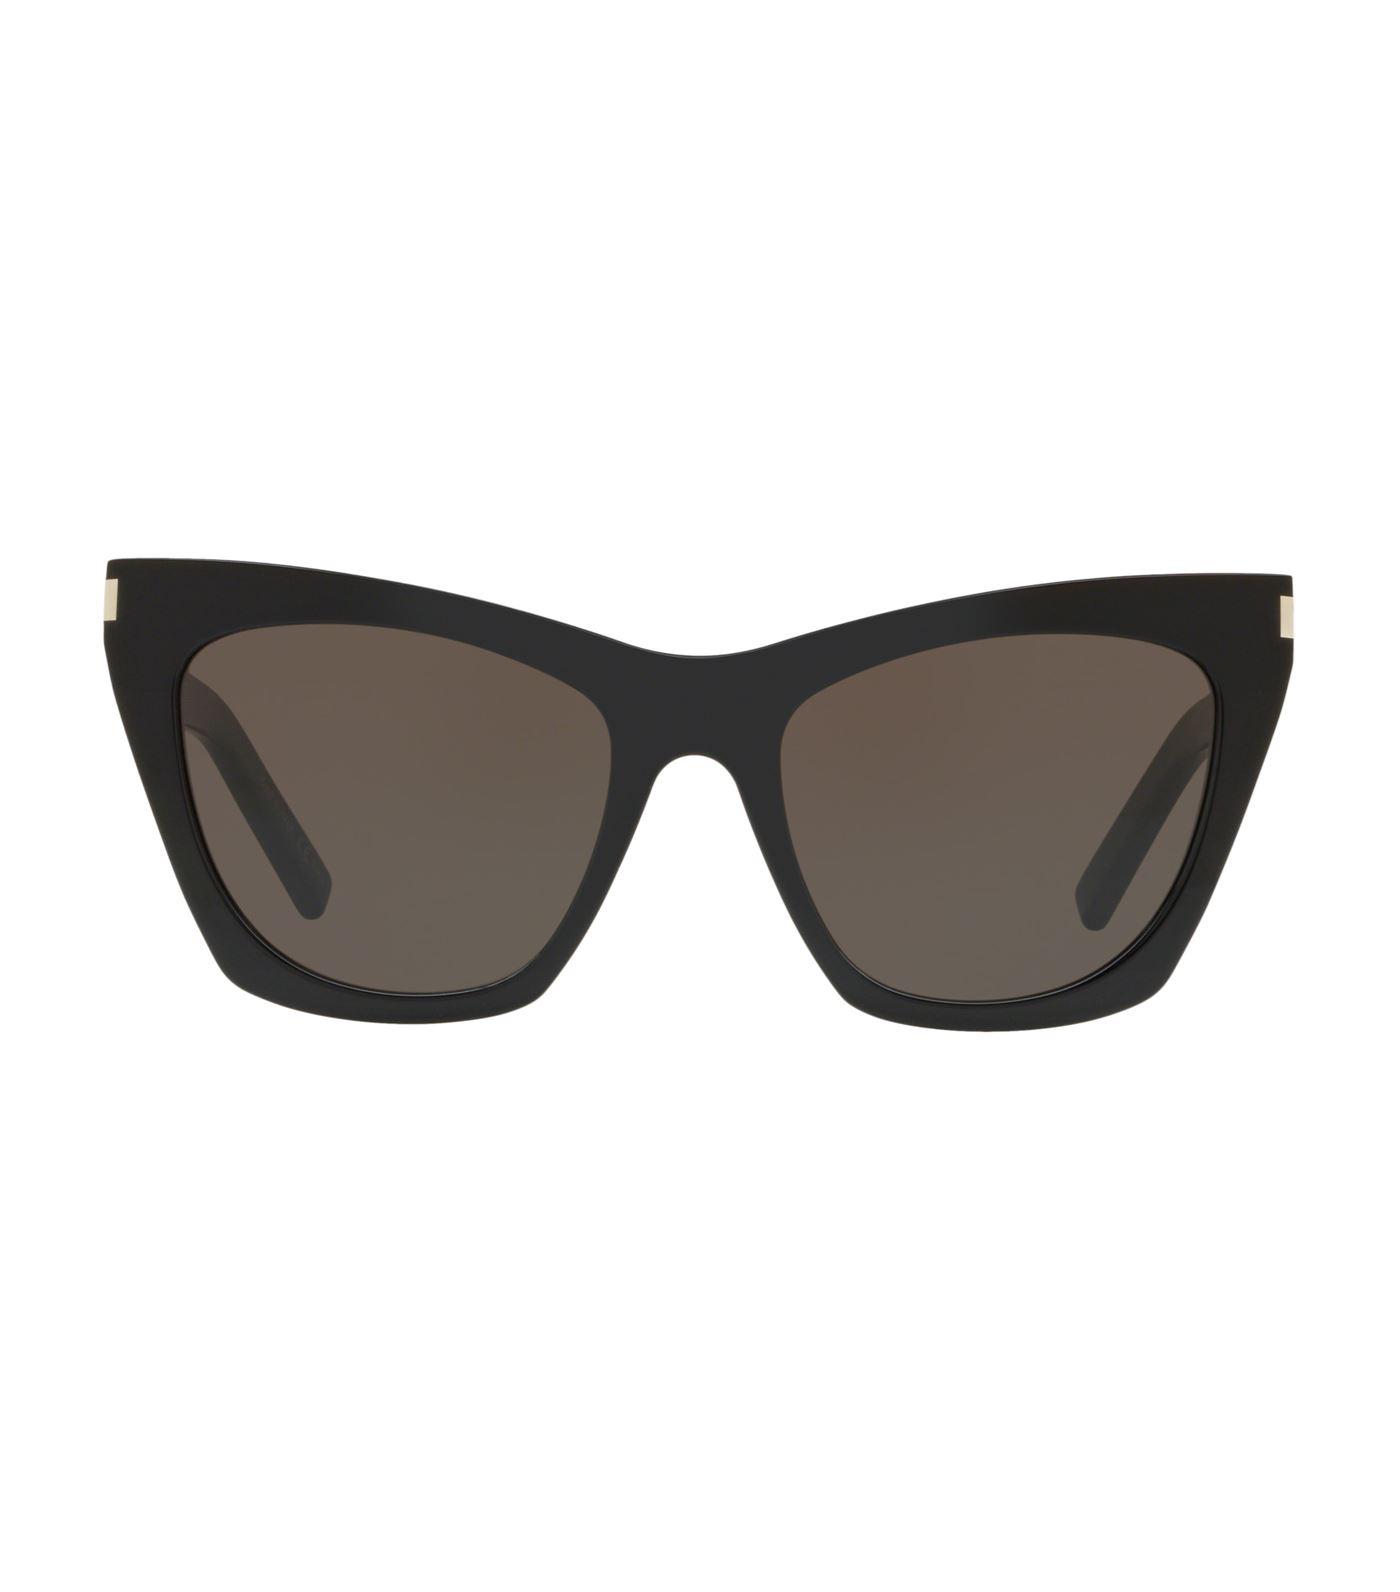 Saint Laurent Cat Eye Sunglasses in Black - Lyst